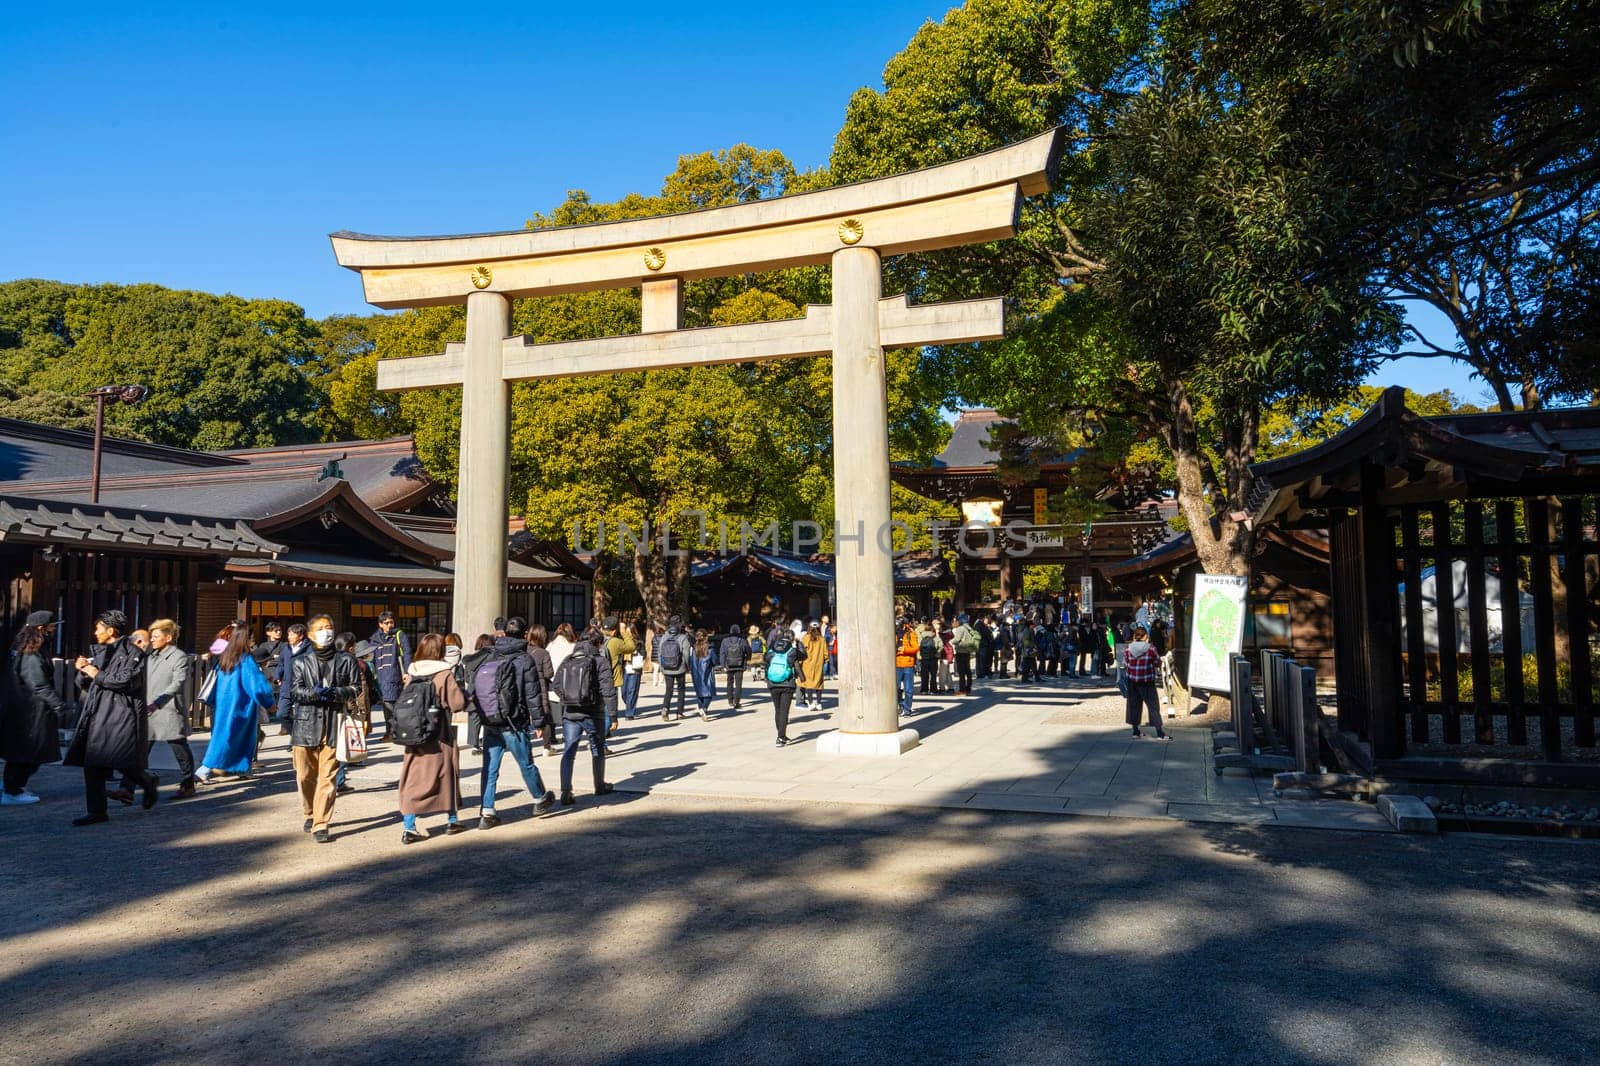 Meiji Shinto Temple in Tokyo, Japan by sergiodv